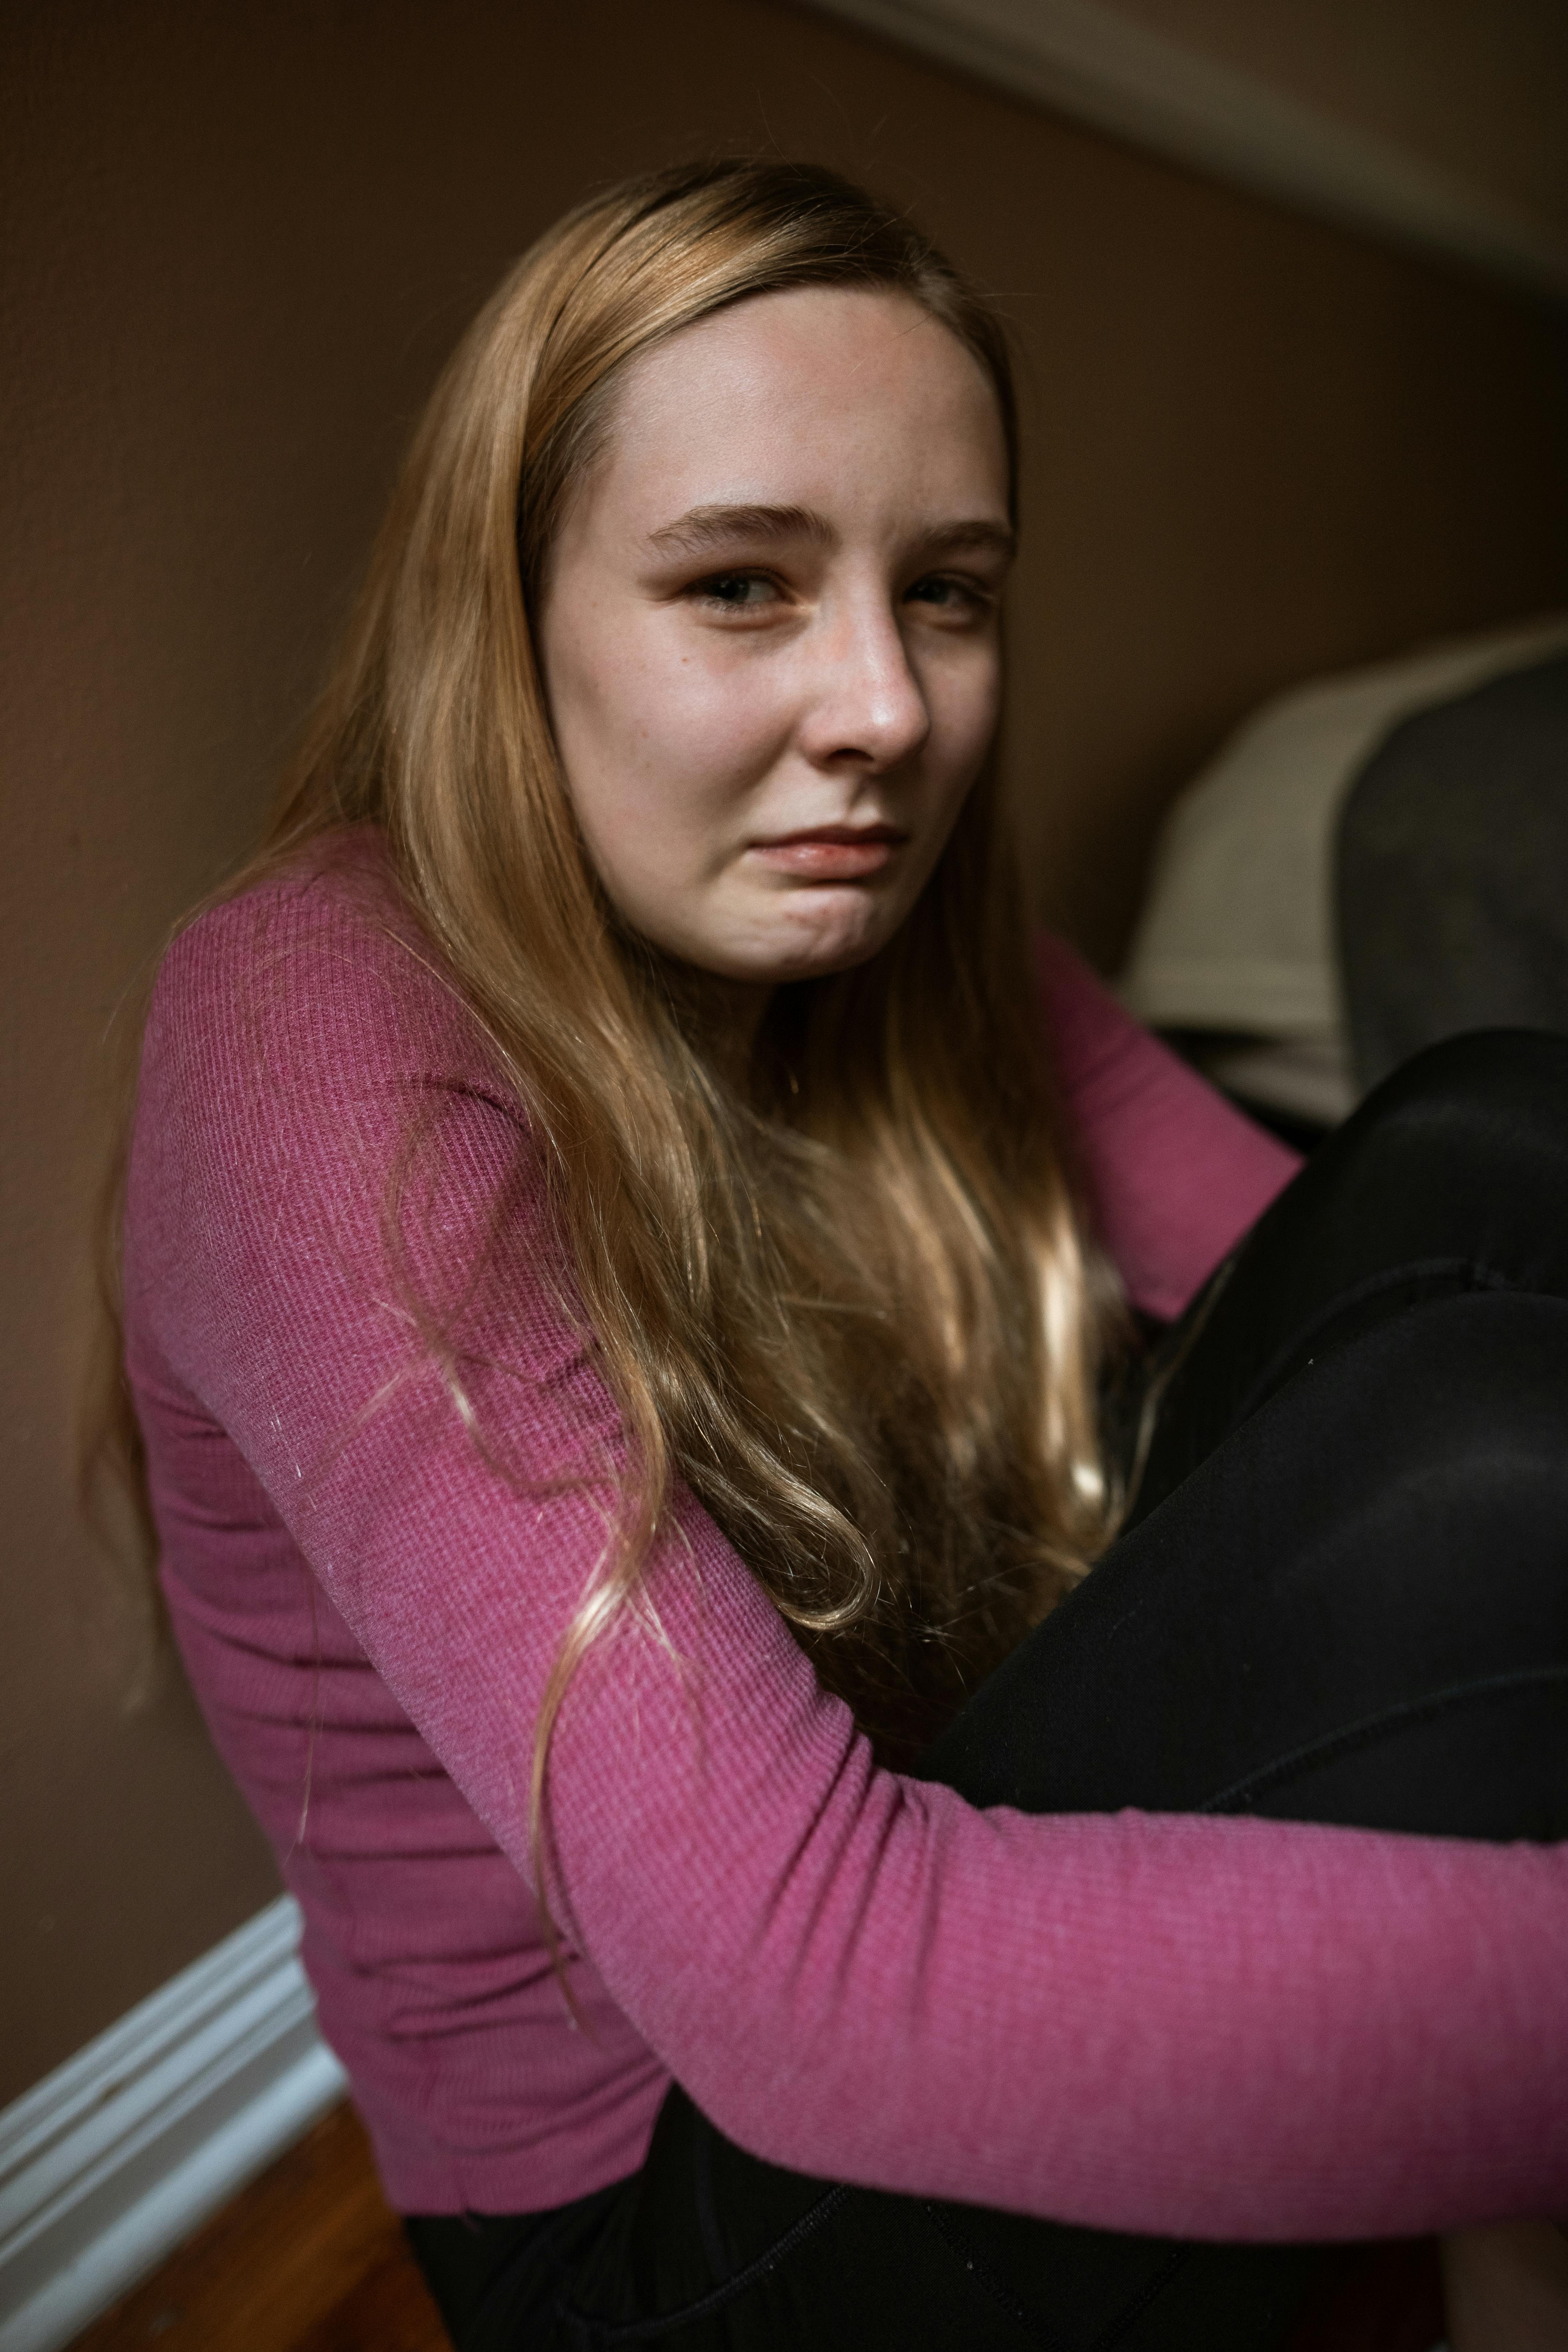 Sad teenage girl | Source: Pexels